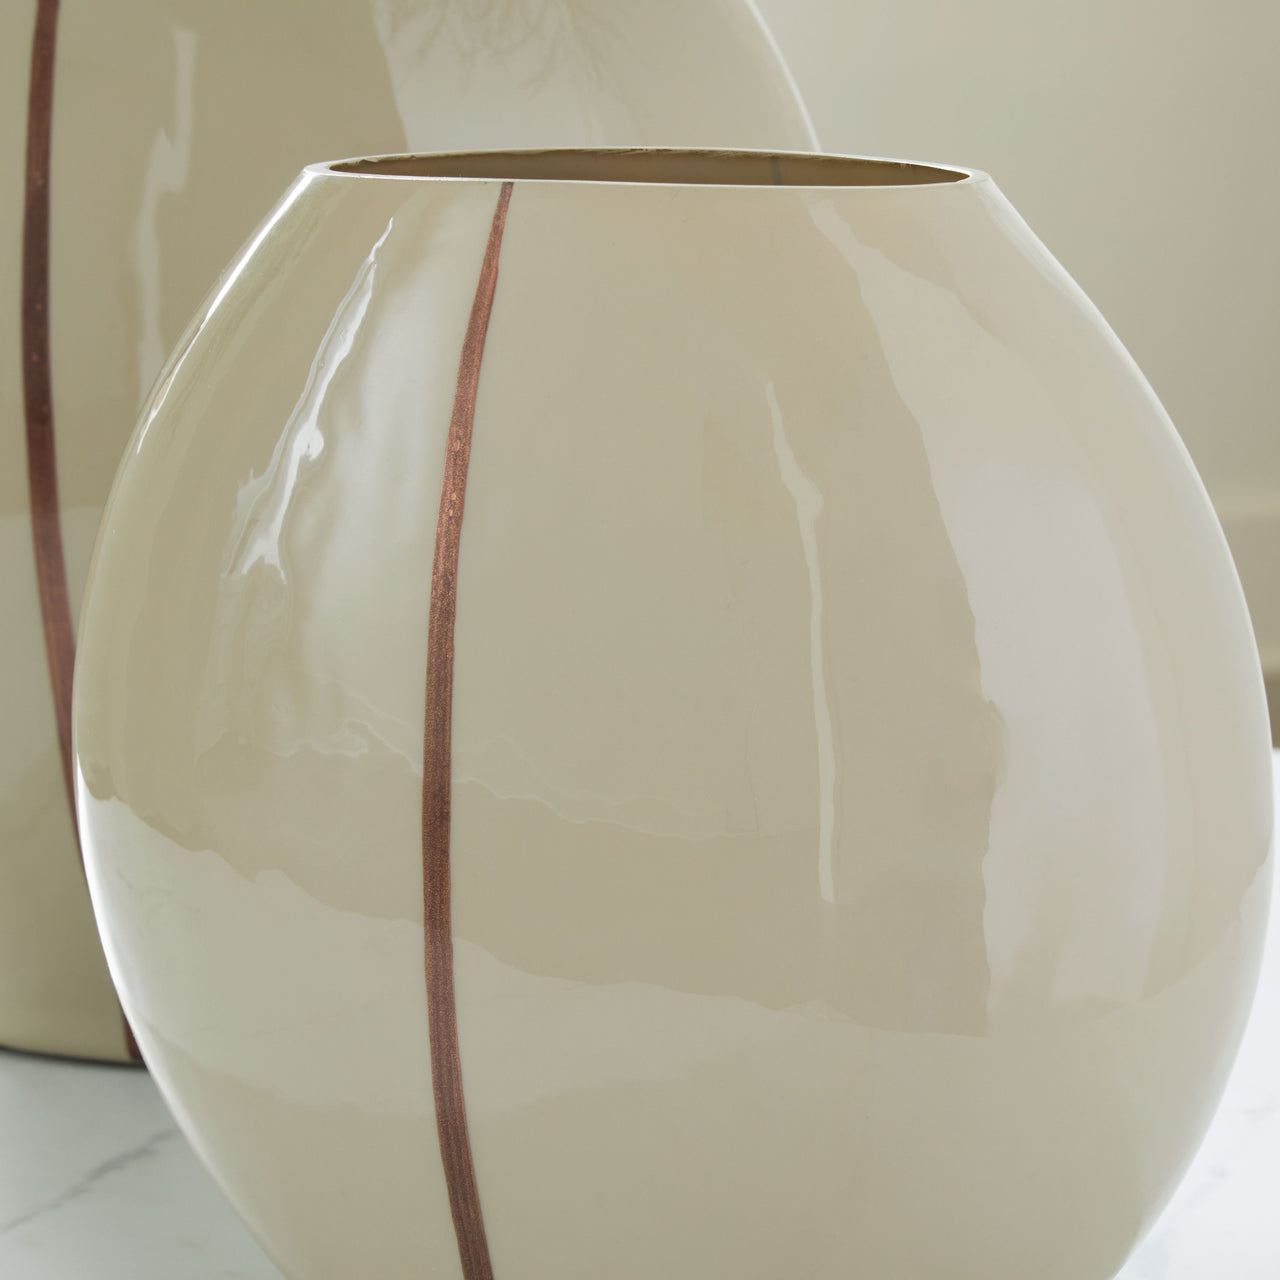 Sheabourne - Vase - Tony's Home Furnishings